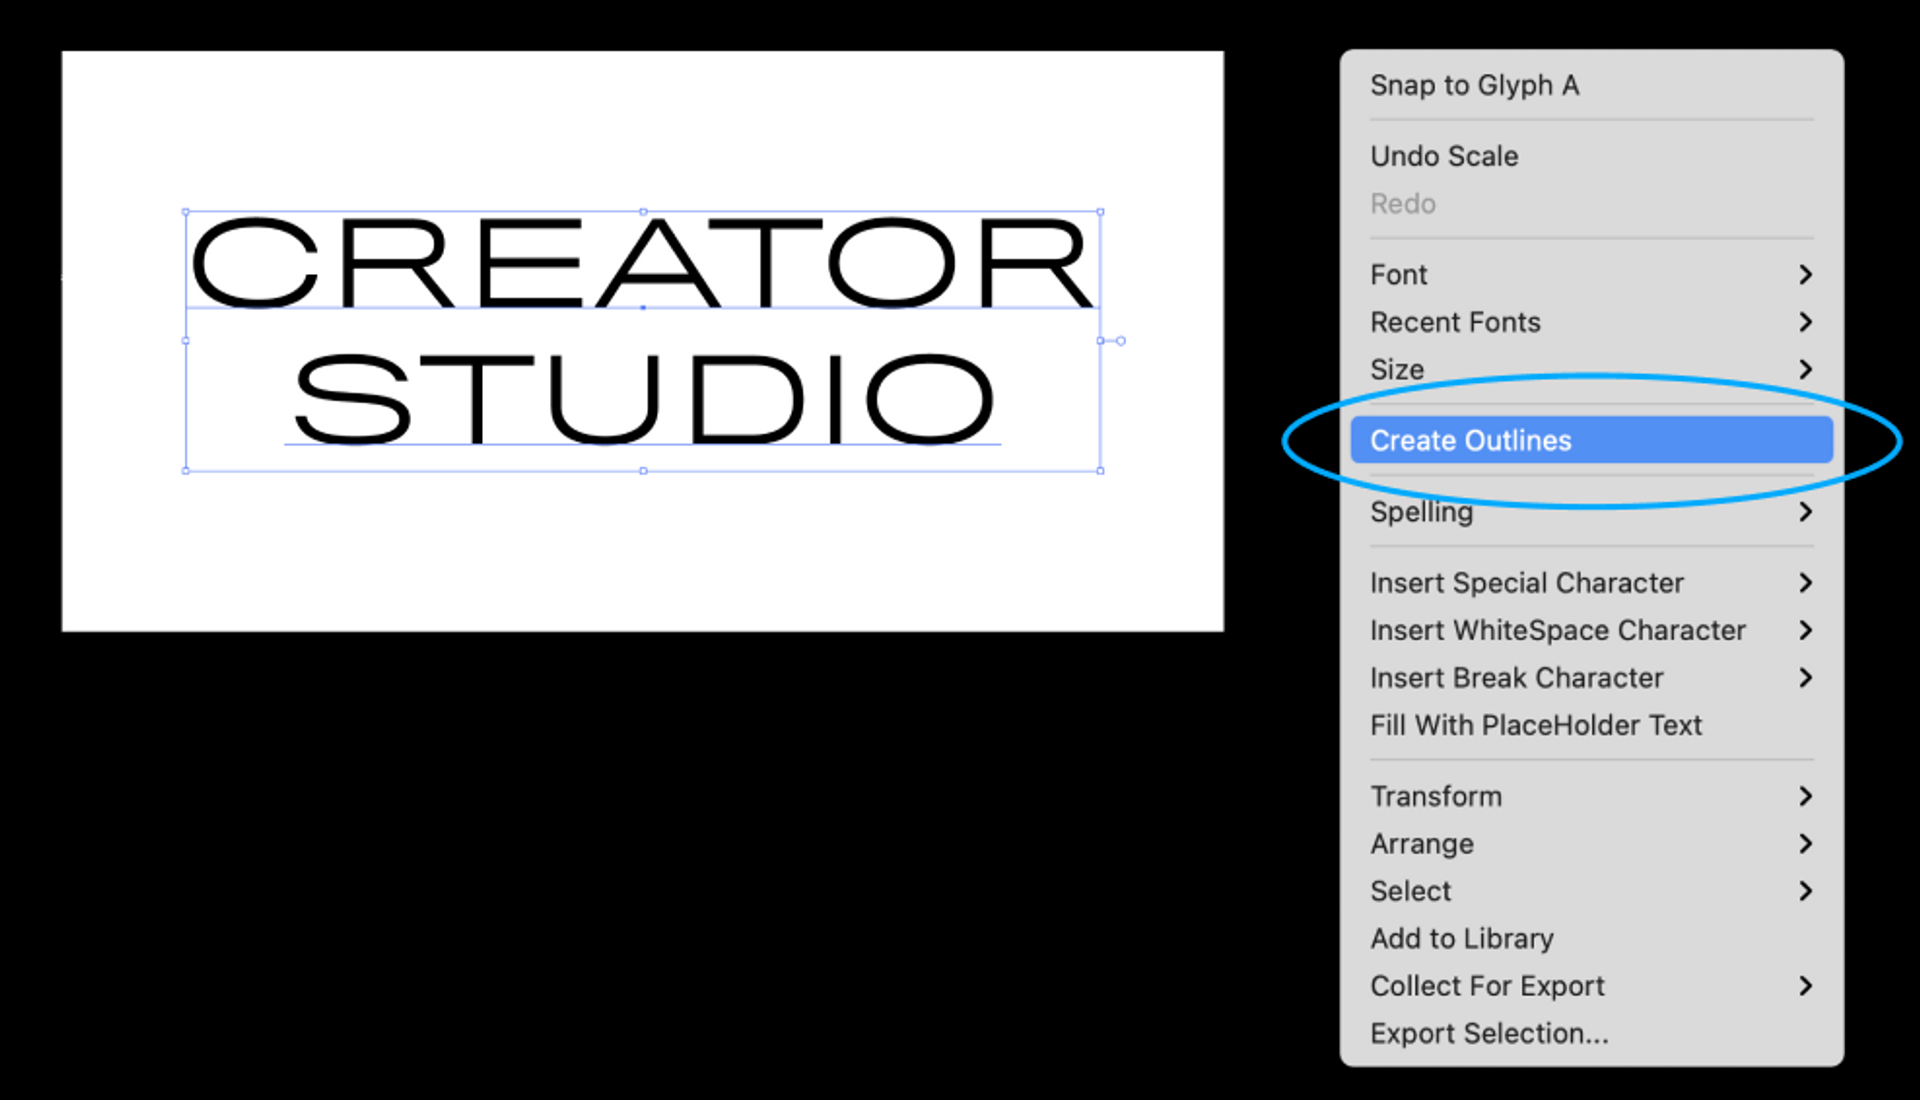 Creator Studio - Image